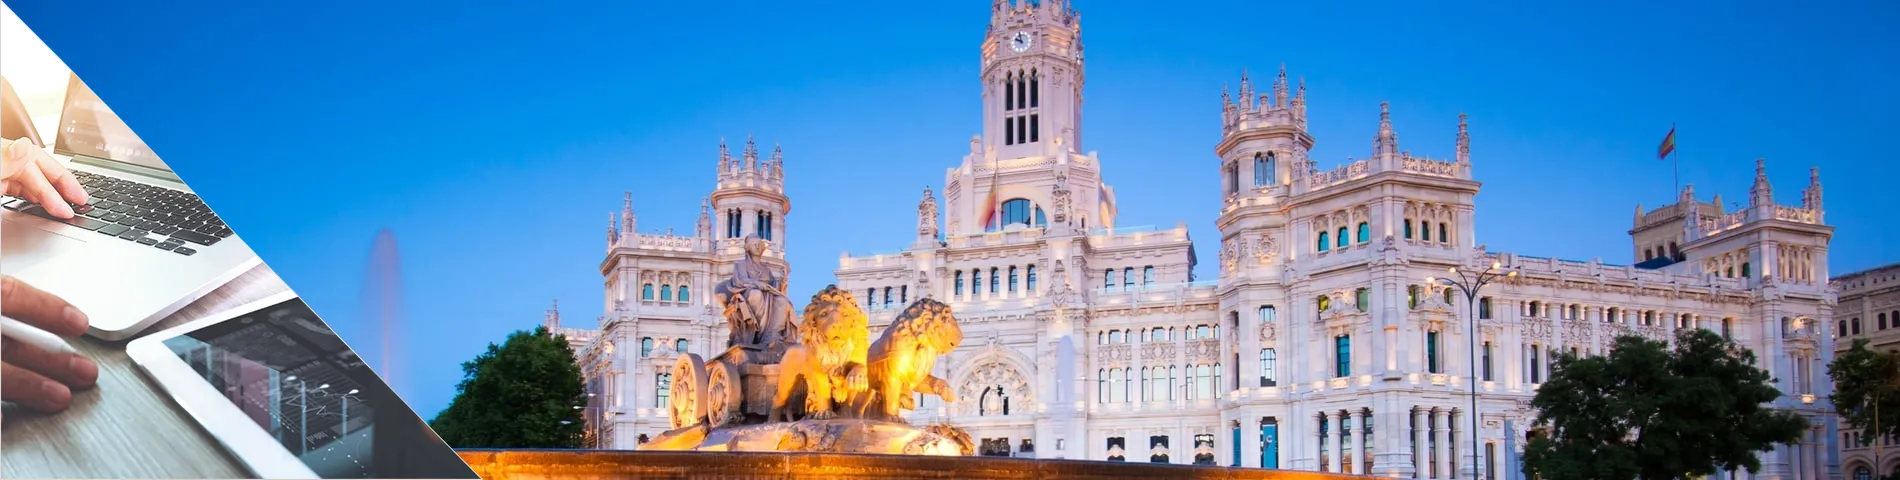 Madrid - Spanisch & Digitale Medien